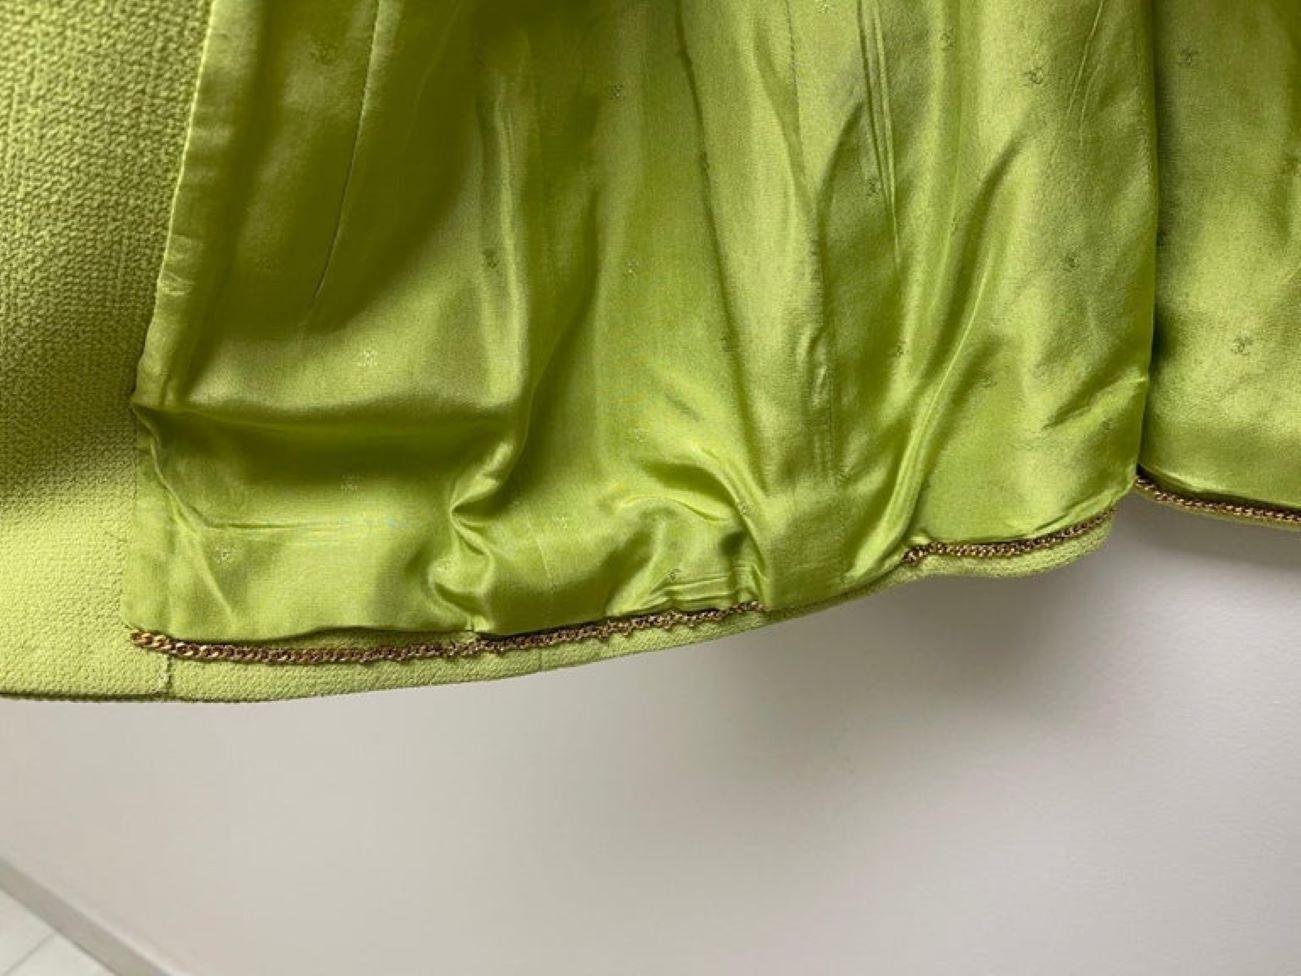 CHANEL BOUTIQUE Chartreuse Green Suit Signature Chanel 7